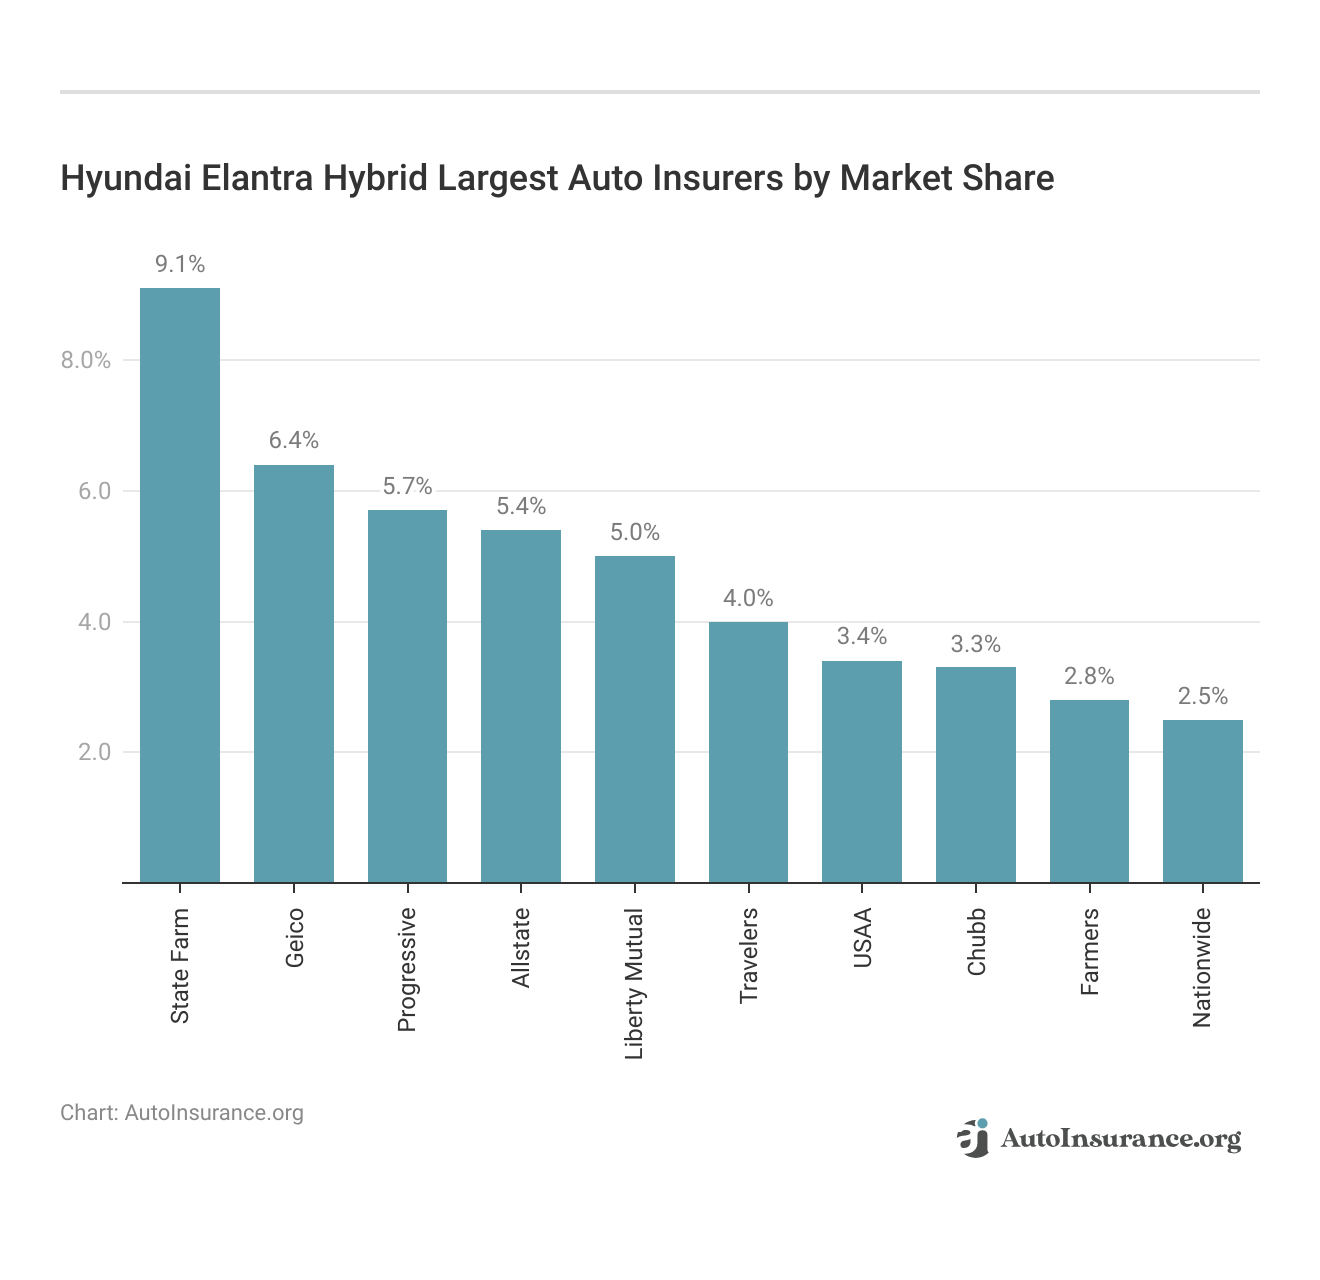 <h3>Hyundai Elantra Hybrid Largest Auto Insurers by Market Share</h3>